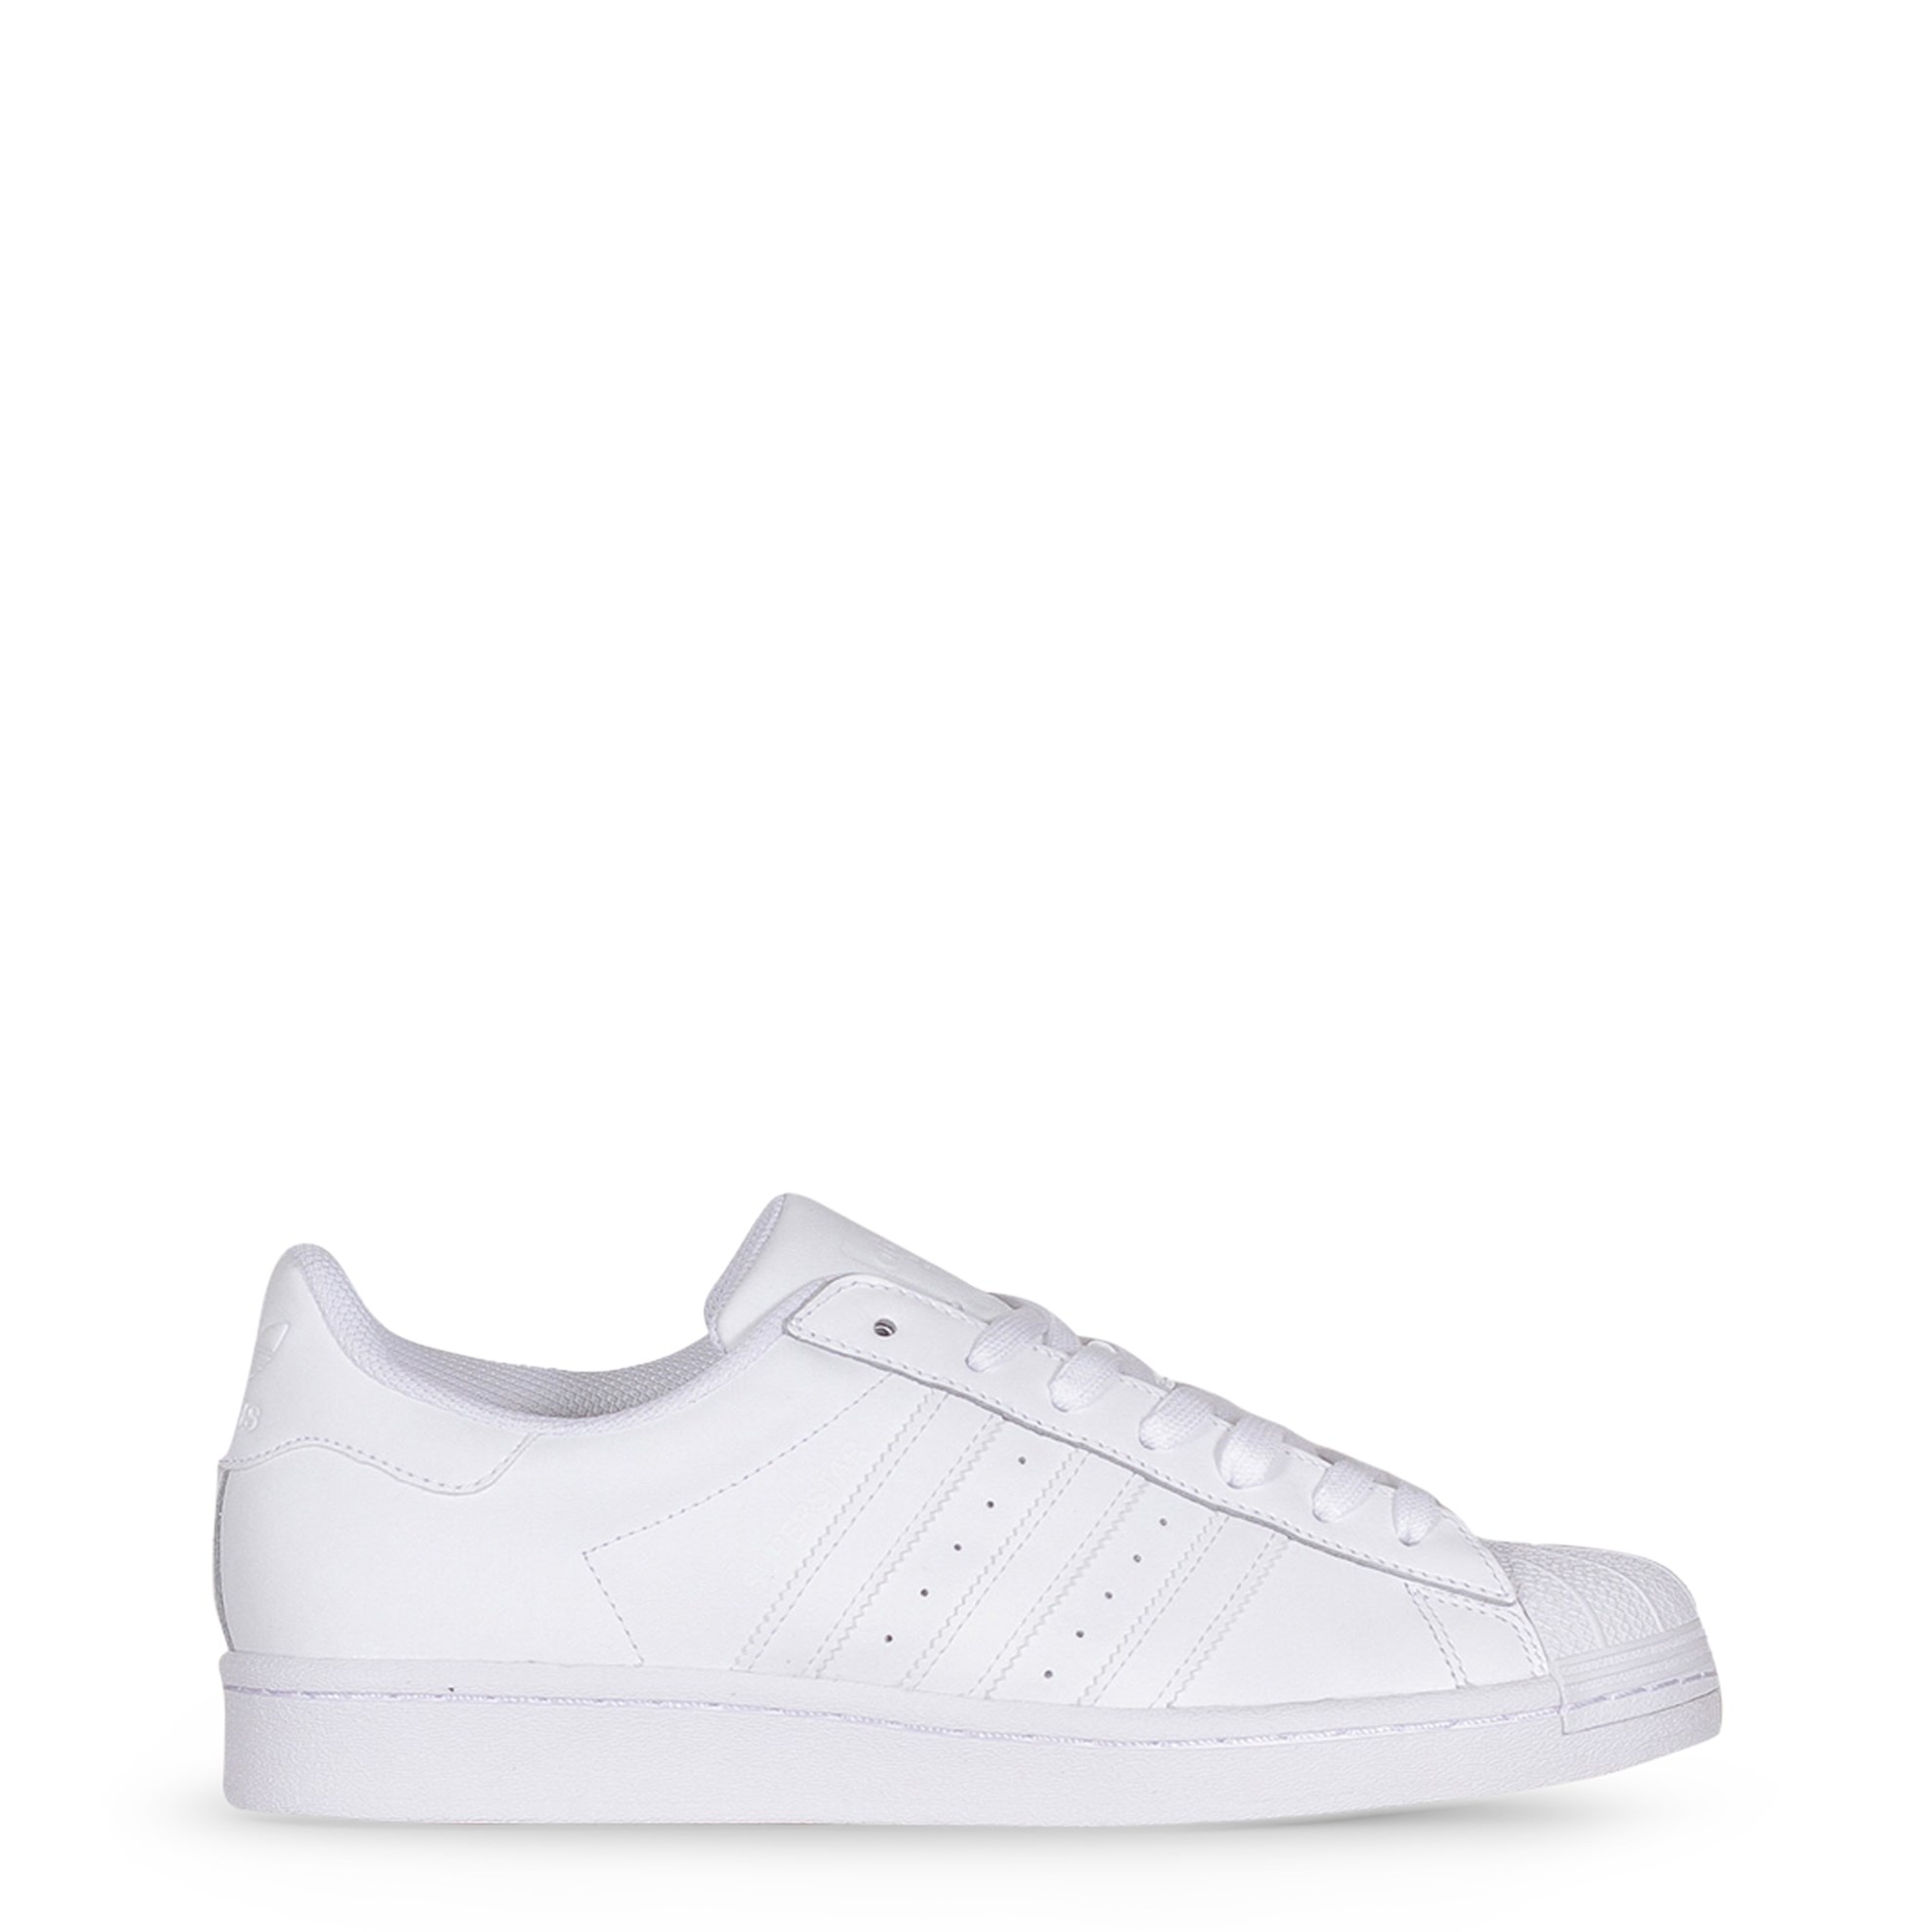 Adidas Unisex Shoes Superstar White